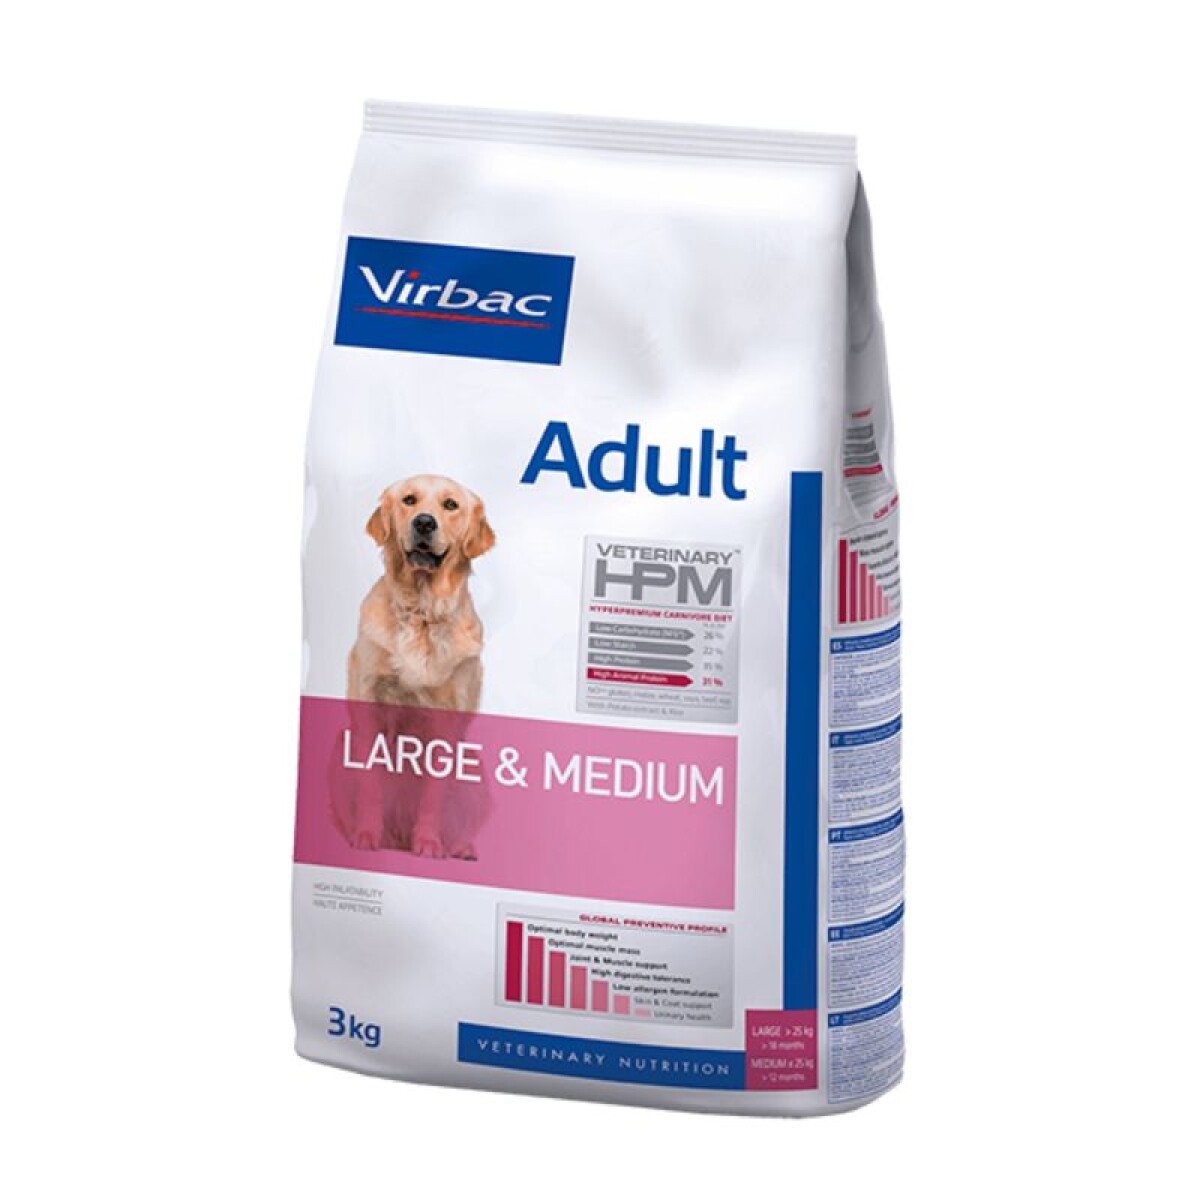 HPM DOG ADULT LARGE & MEDIUM 3KG - Hpm Dog Adult Large & Medium 3kg 